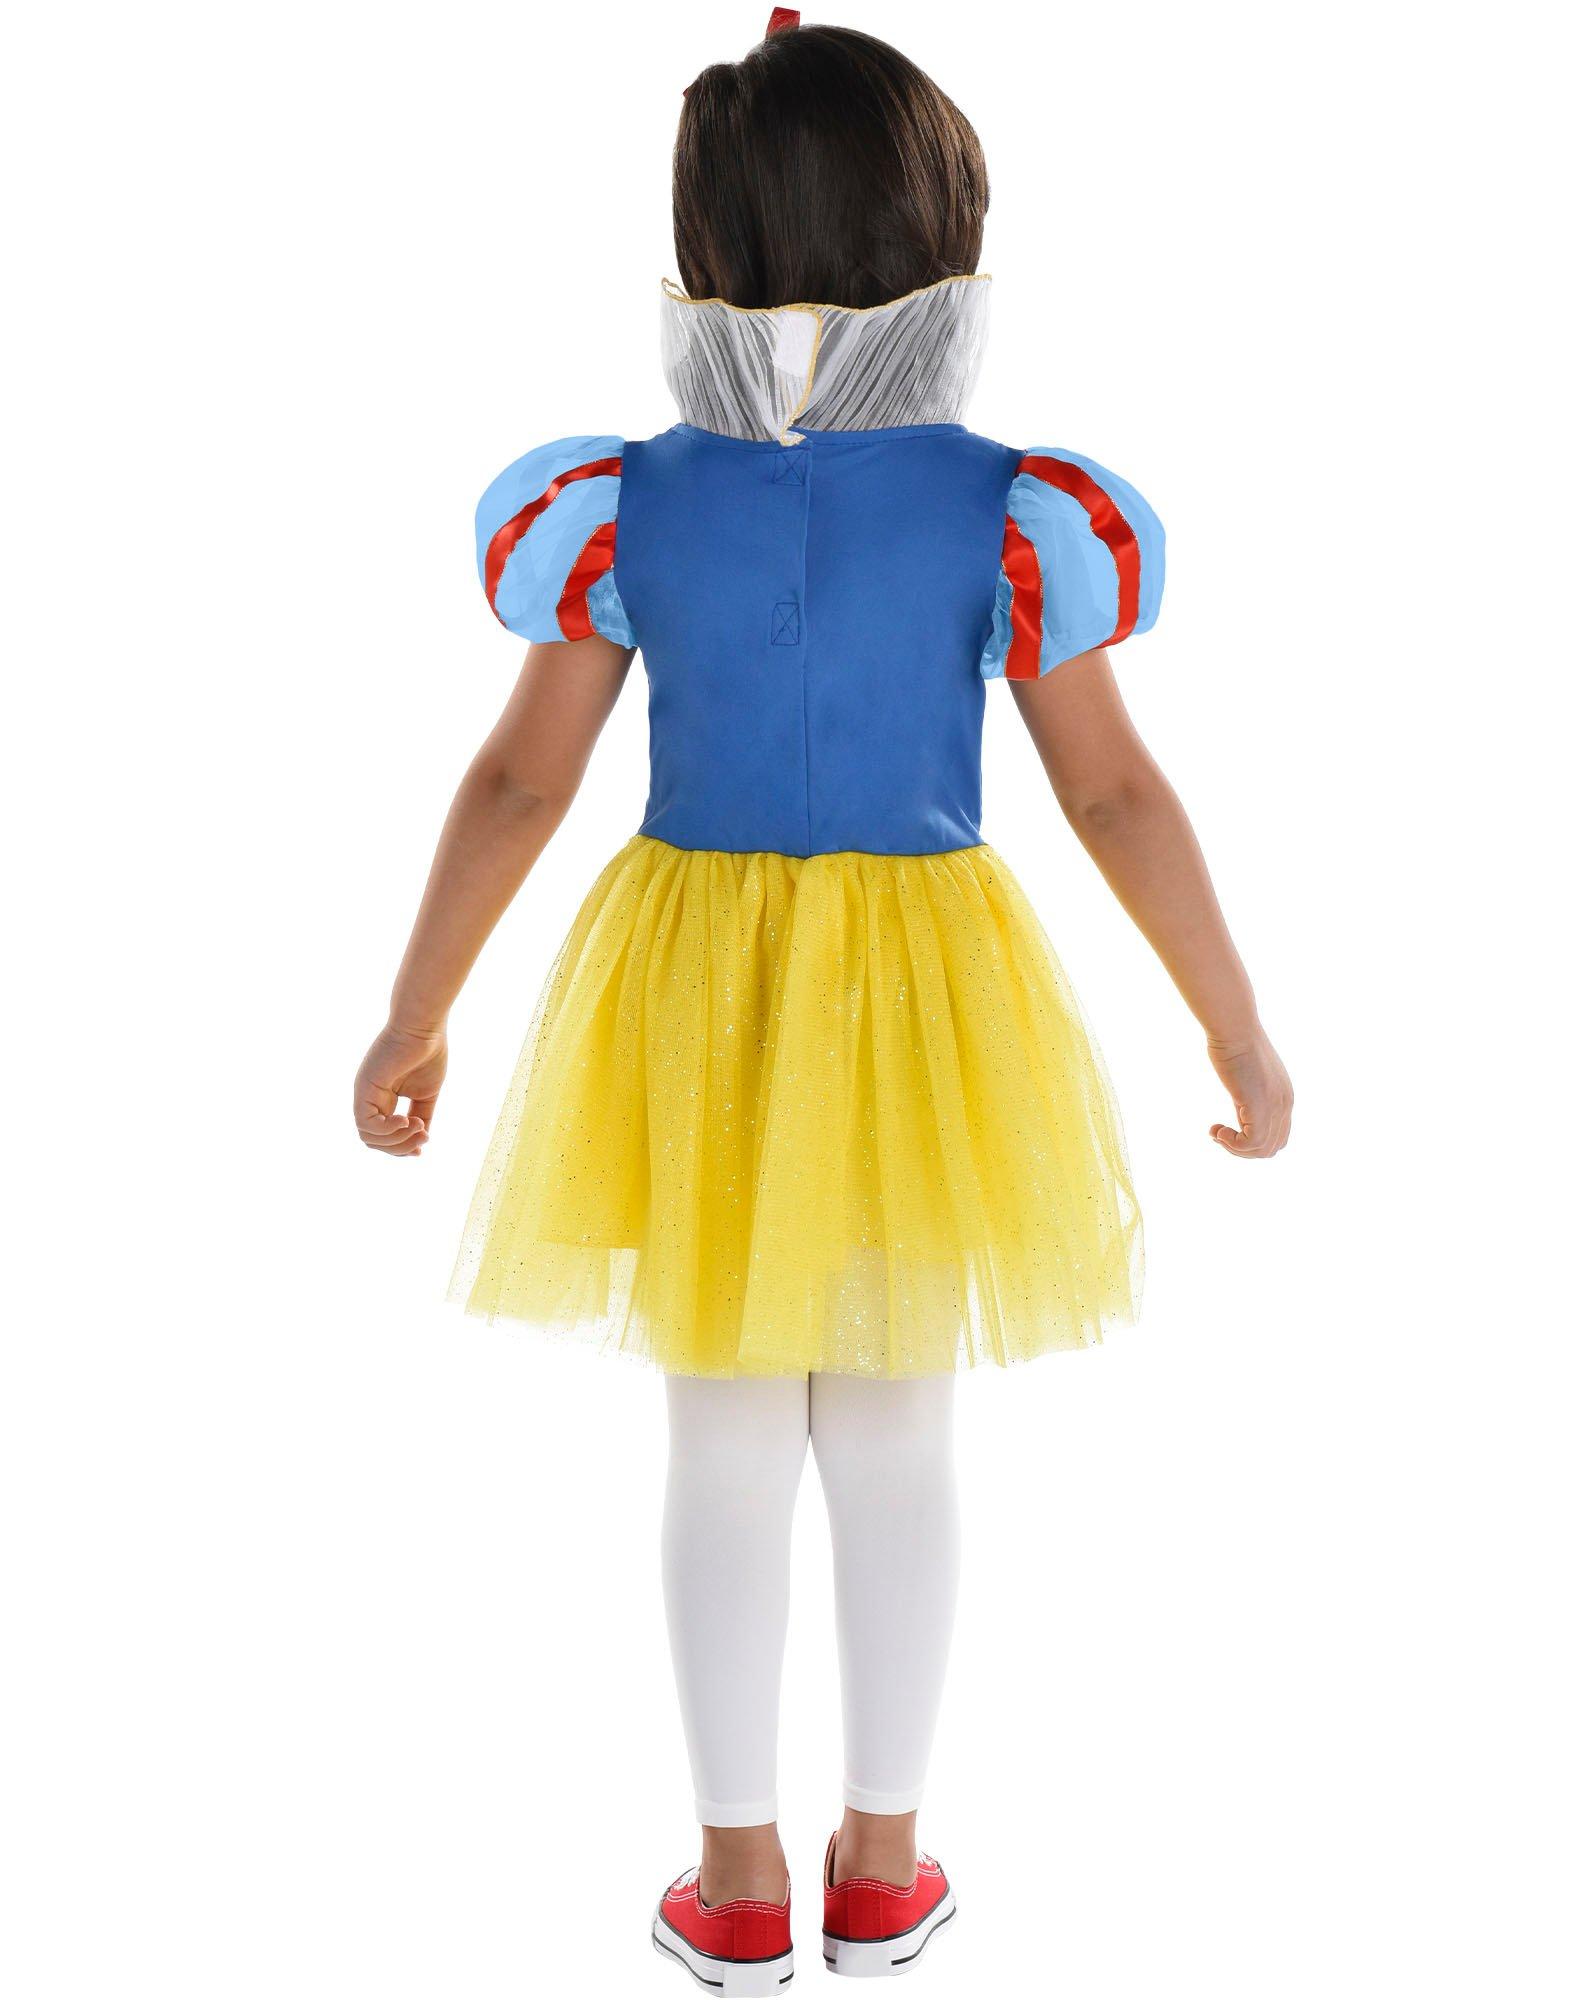 Kids' Light-Up Snow White Costume - Disney Snow White & The Seven Dwarfs